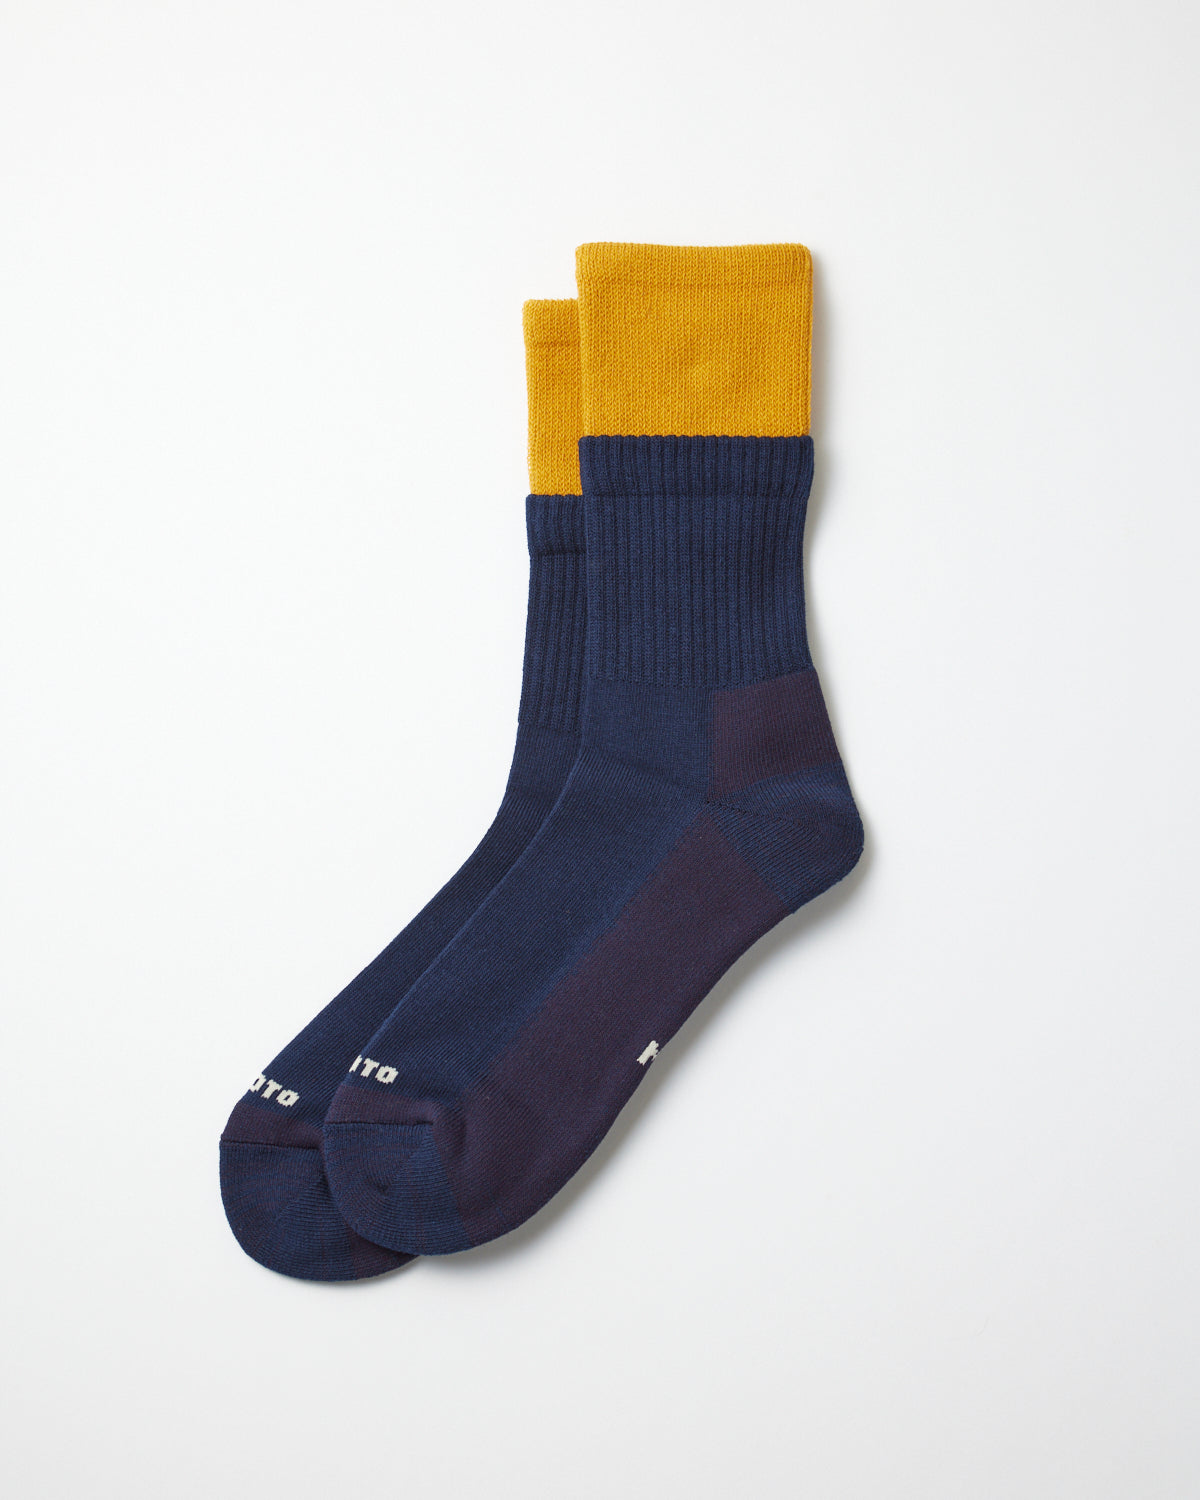 Organic Cotton Double Layer Crew Socks - Yellow/Navy